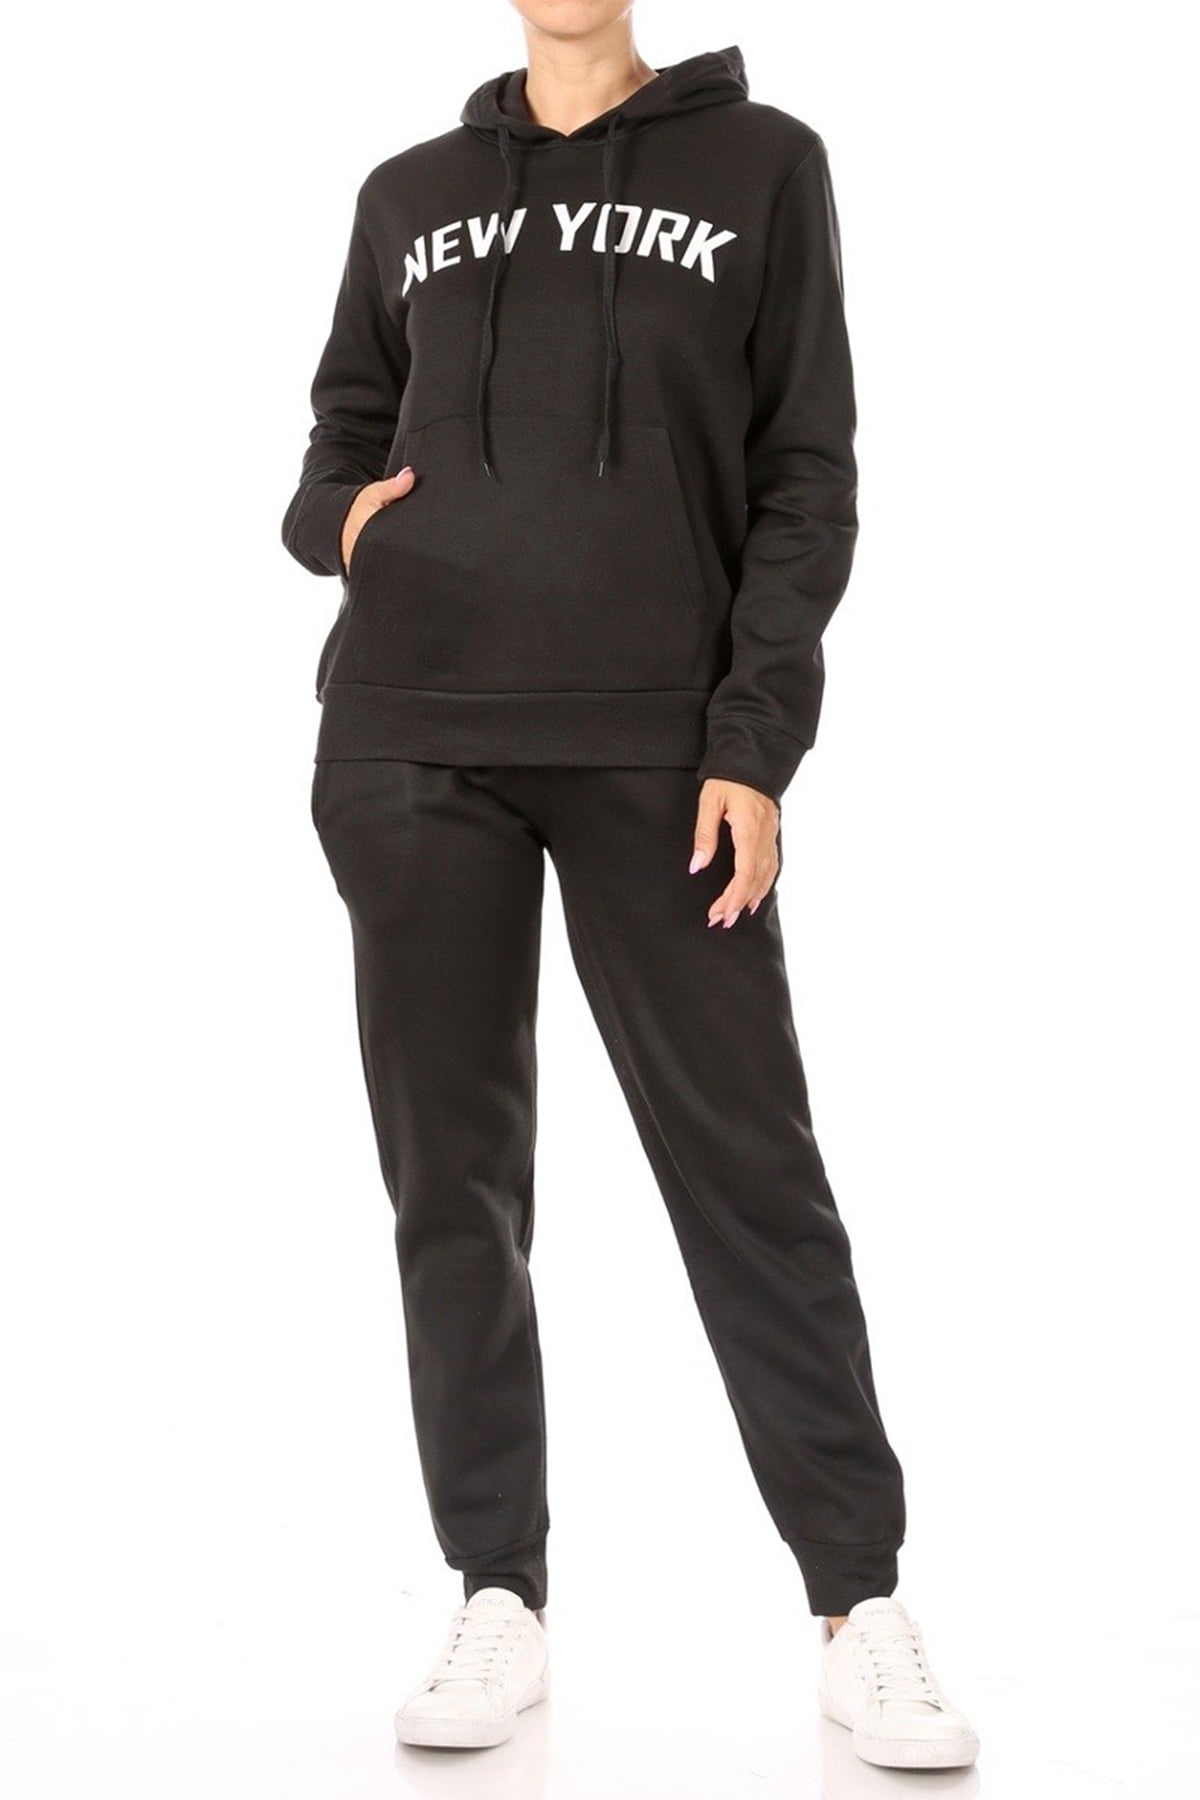 Women's Casual New York Logo Long Sleeve Hoodie Jogger Sweatpants Lounge